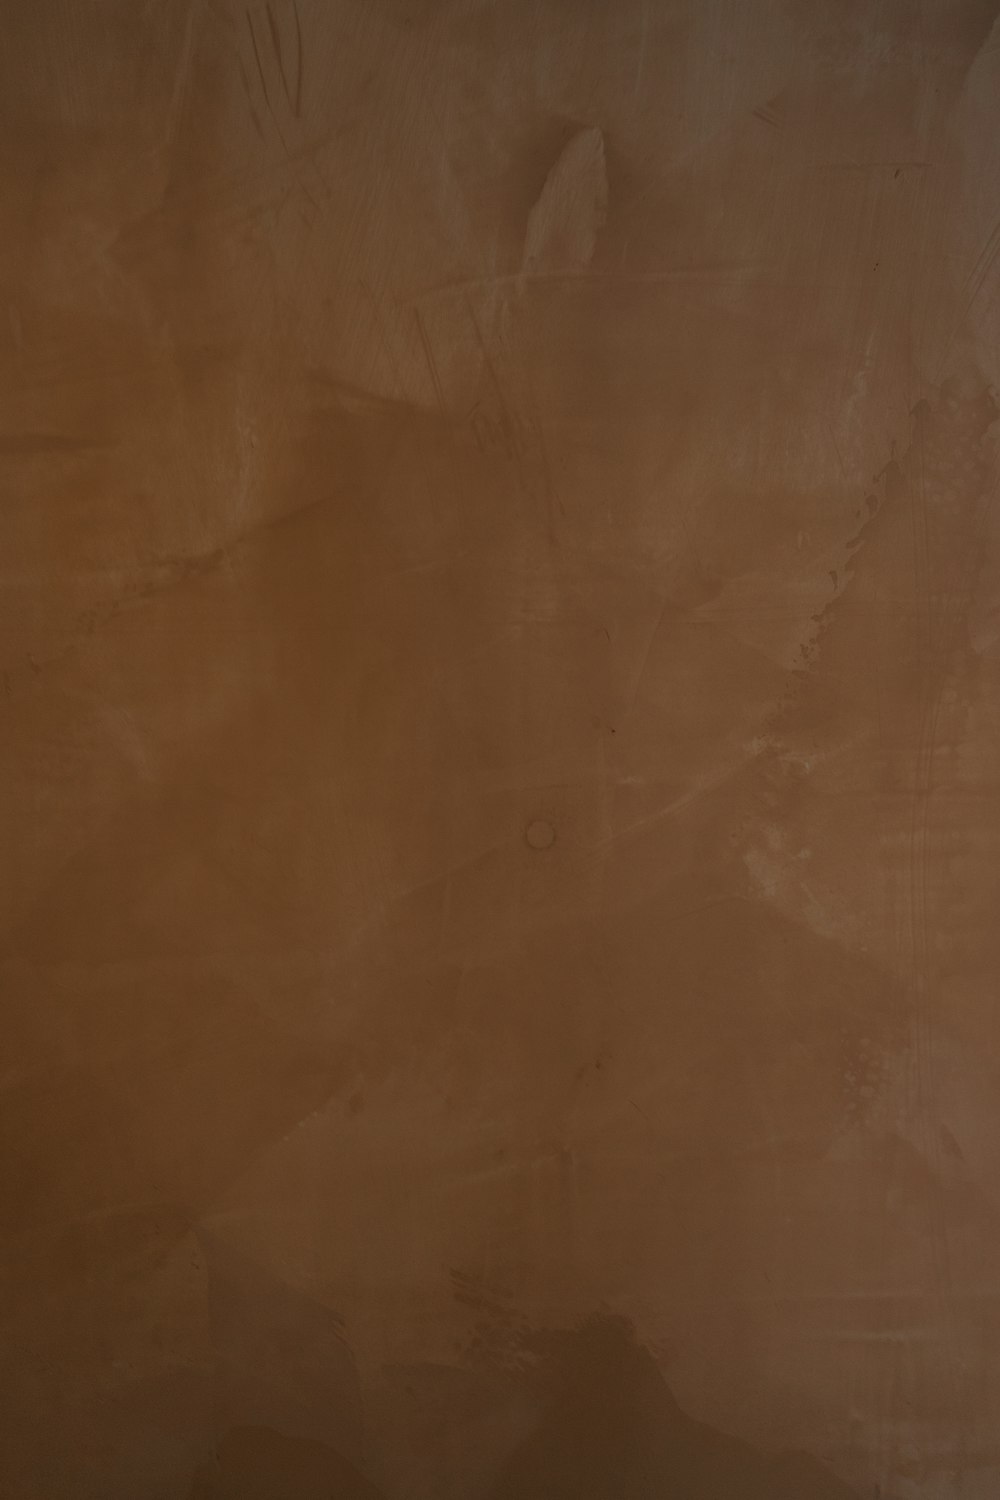 Dark Brown Hairy Textured Background Stock Photo - Download Image